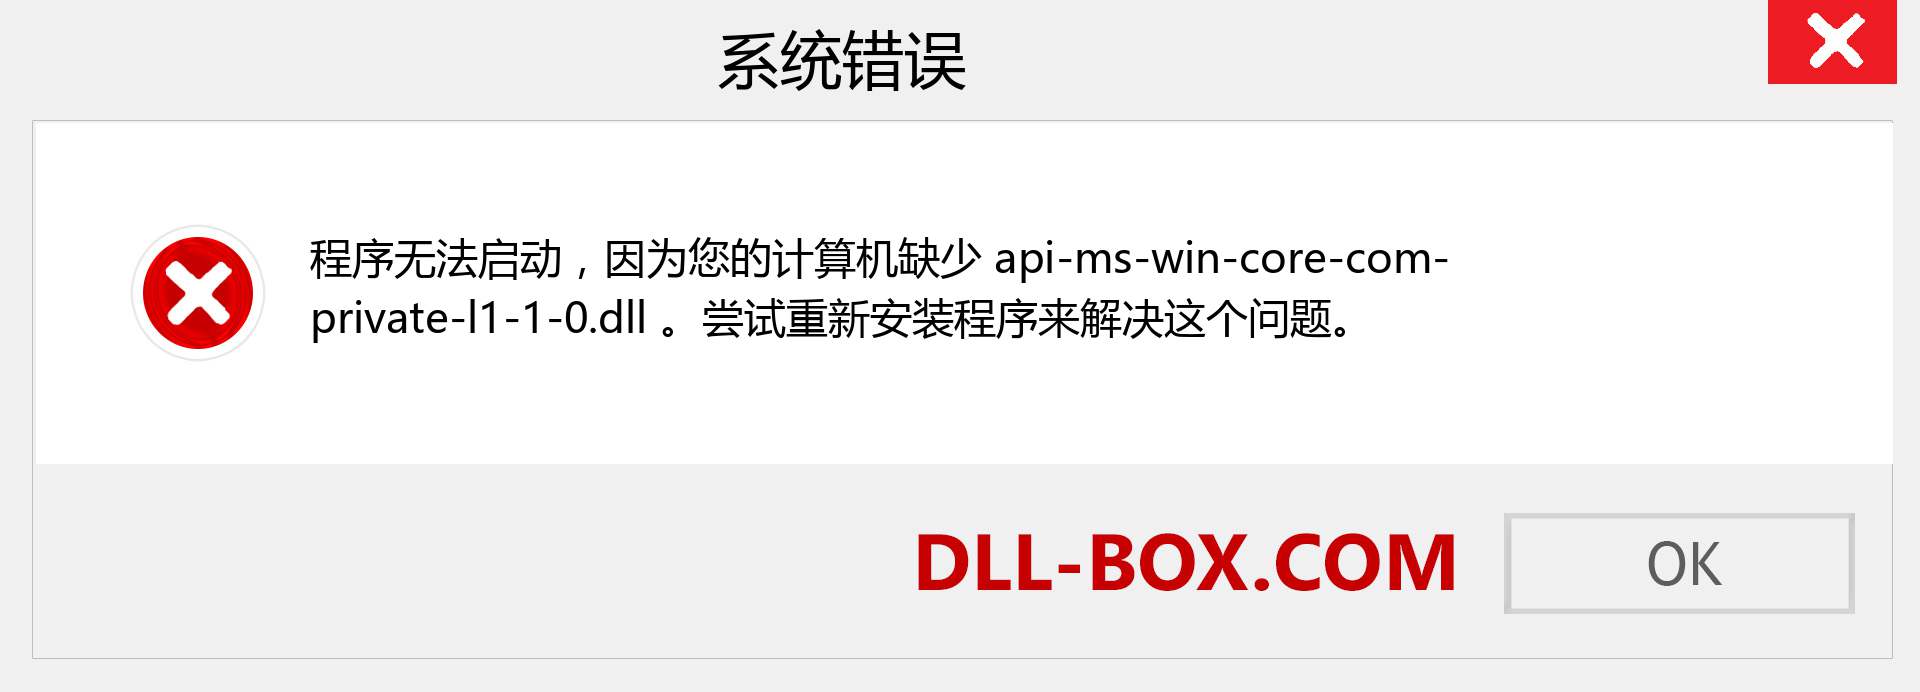 api-ms-win-core-com-private-l1-1-0.dll 文件丢失？。 适用于 Windows 7、8、10 的下载 - 修复 Windows、照片、图像上的 api-ms-win-core-com-private-l1-1-0 dll 丢失错误